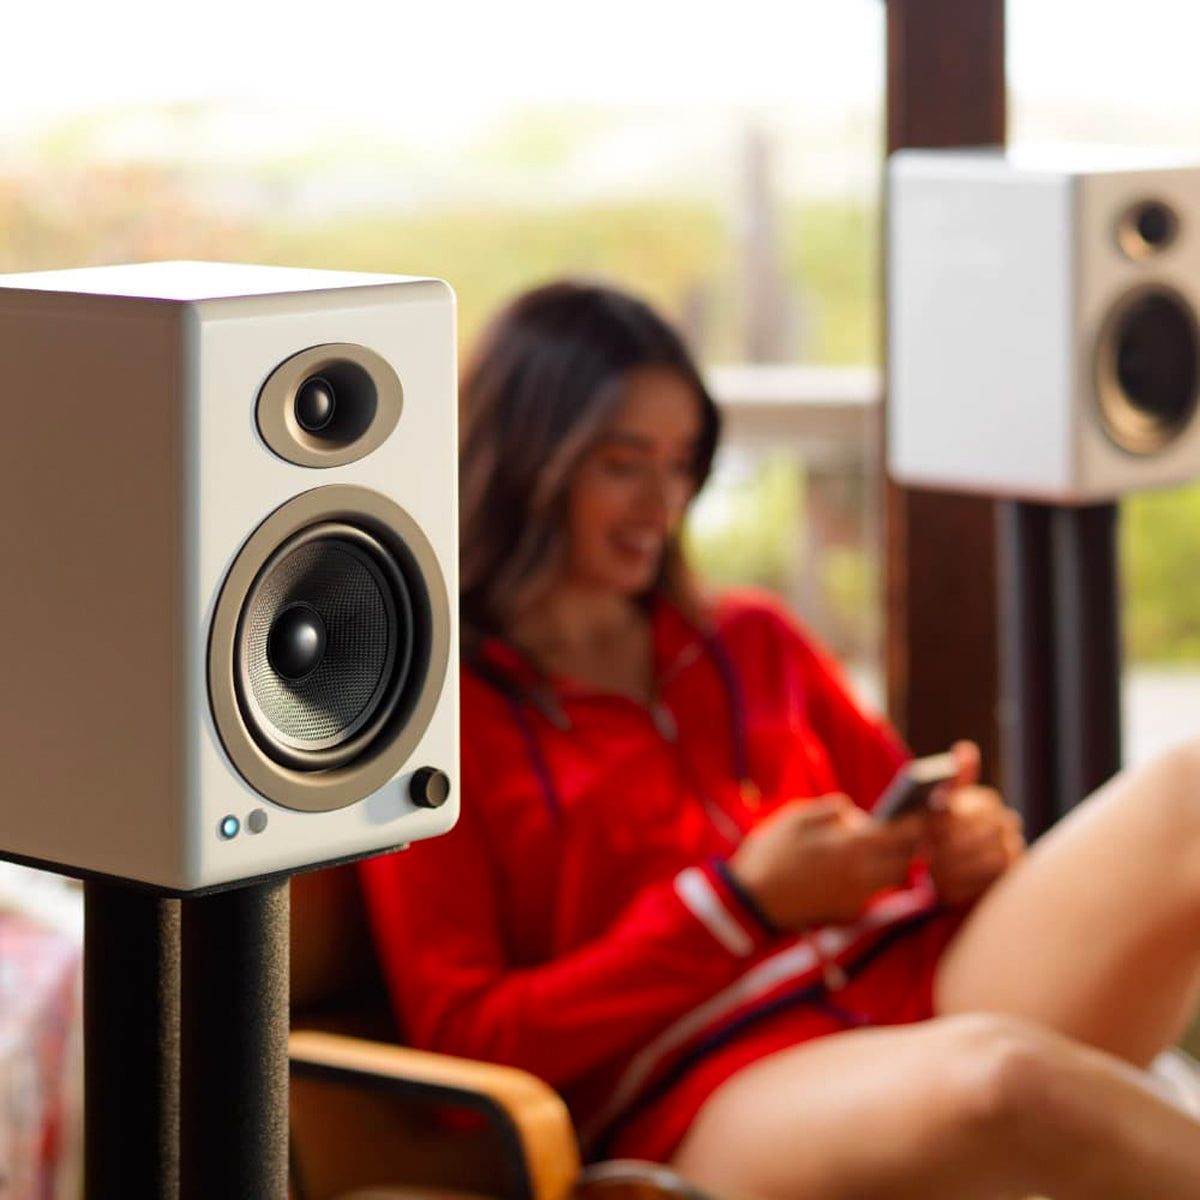 Audioengine A5+ Powered Wireless Speakers - High Gloss White - The Audio Experts